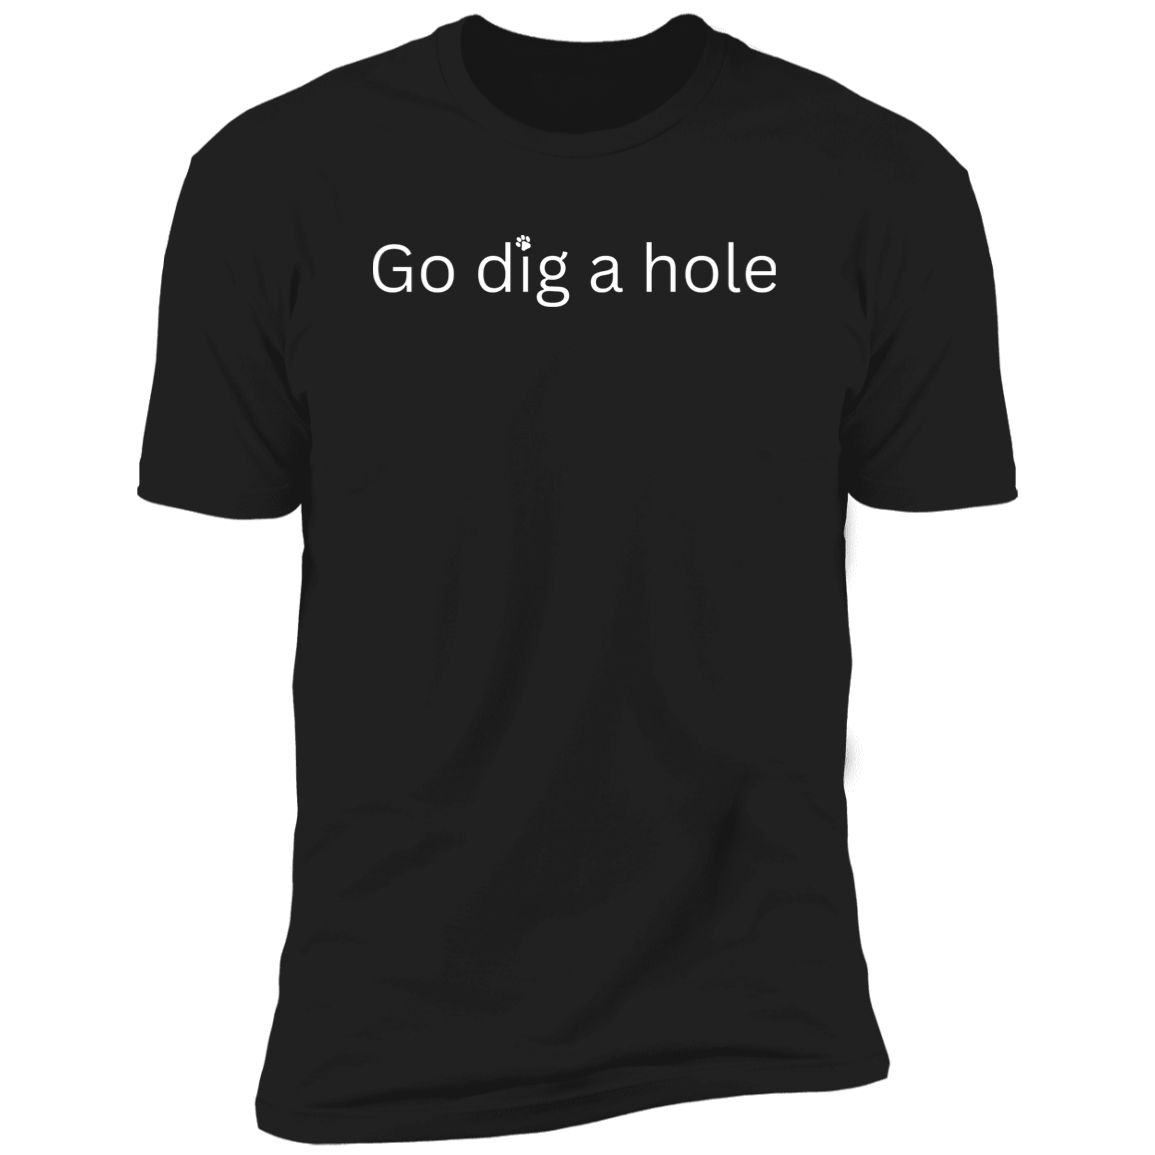 Go Dig a Hole Dog T-Shirt, Dog shirt for humans, funny dog shirt, funny t-shirt, in black